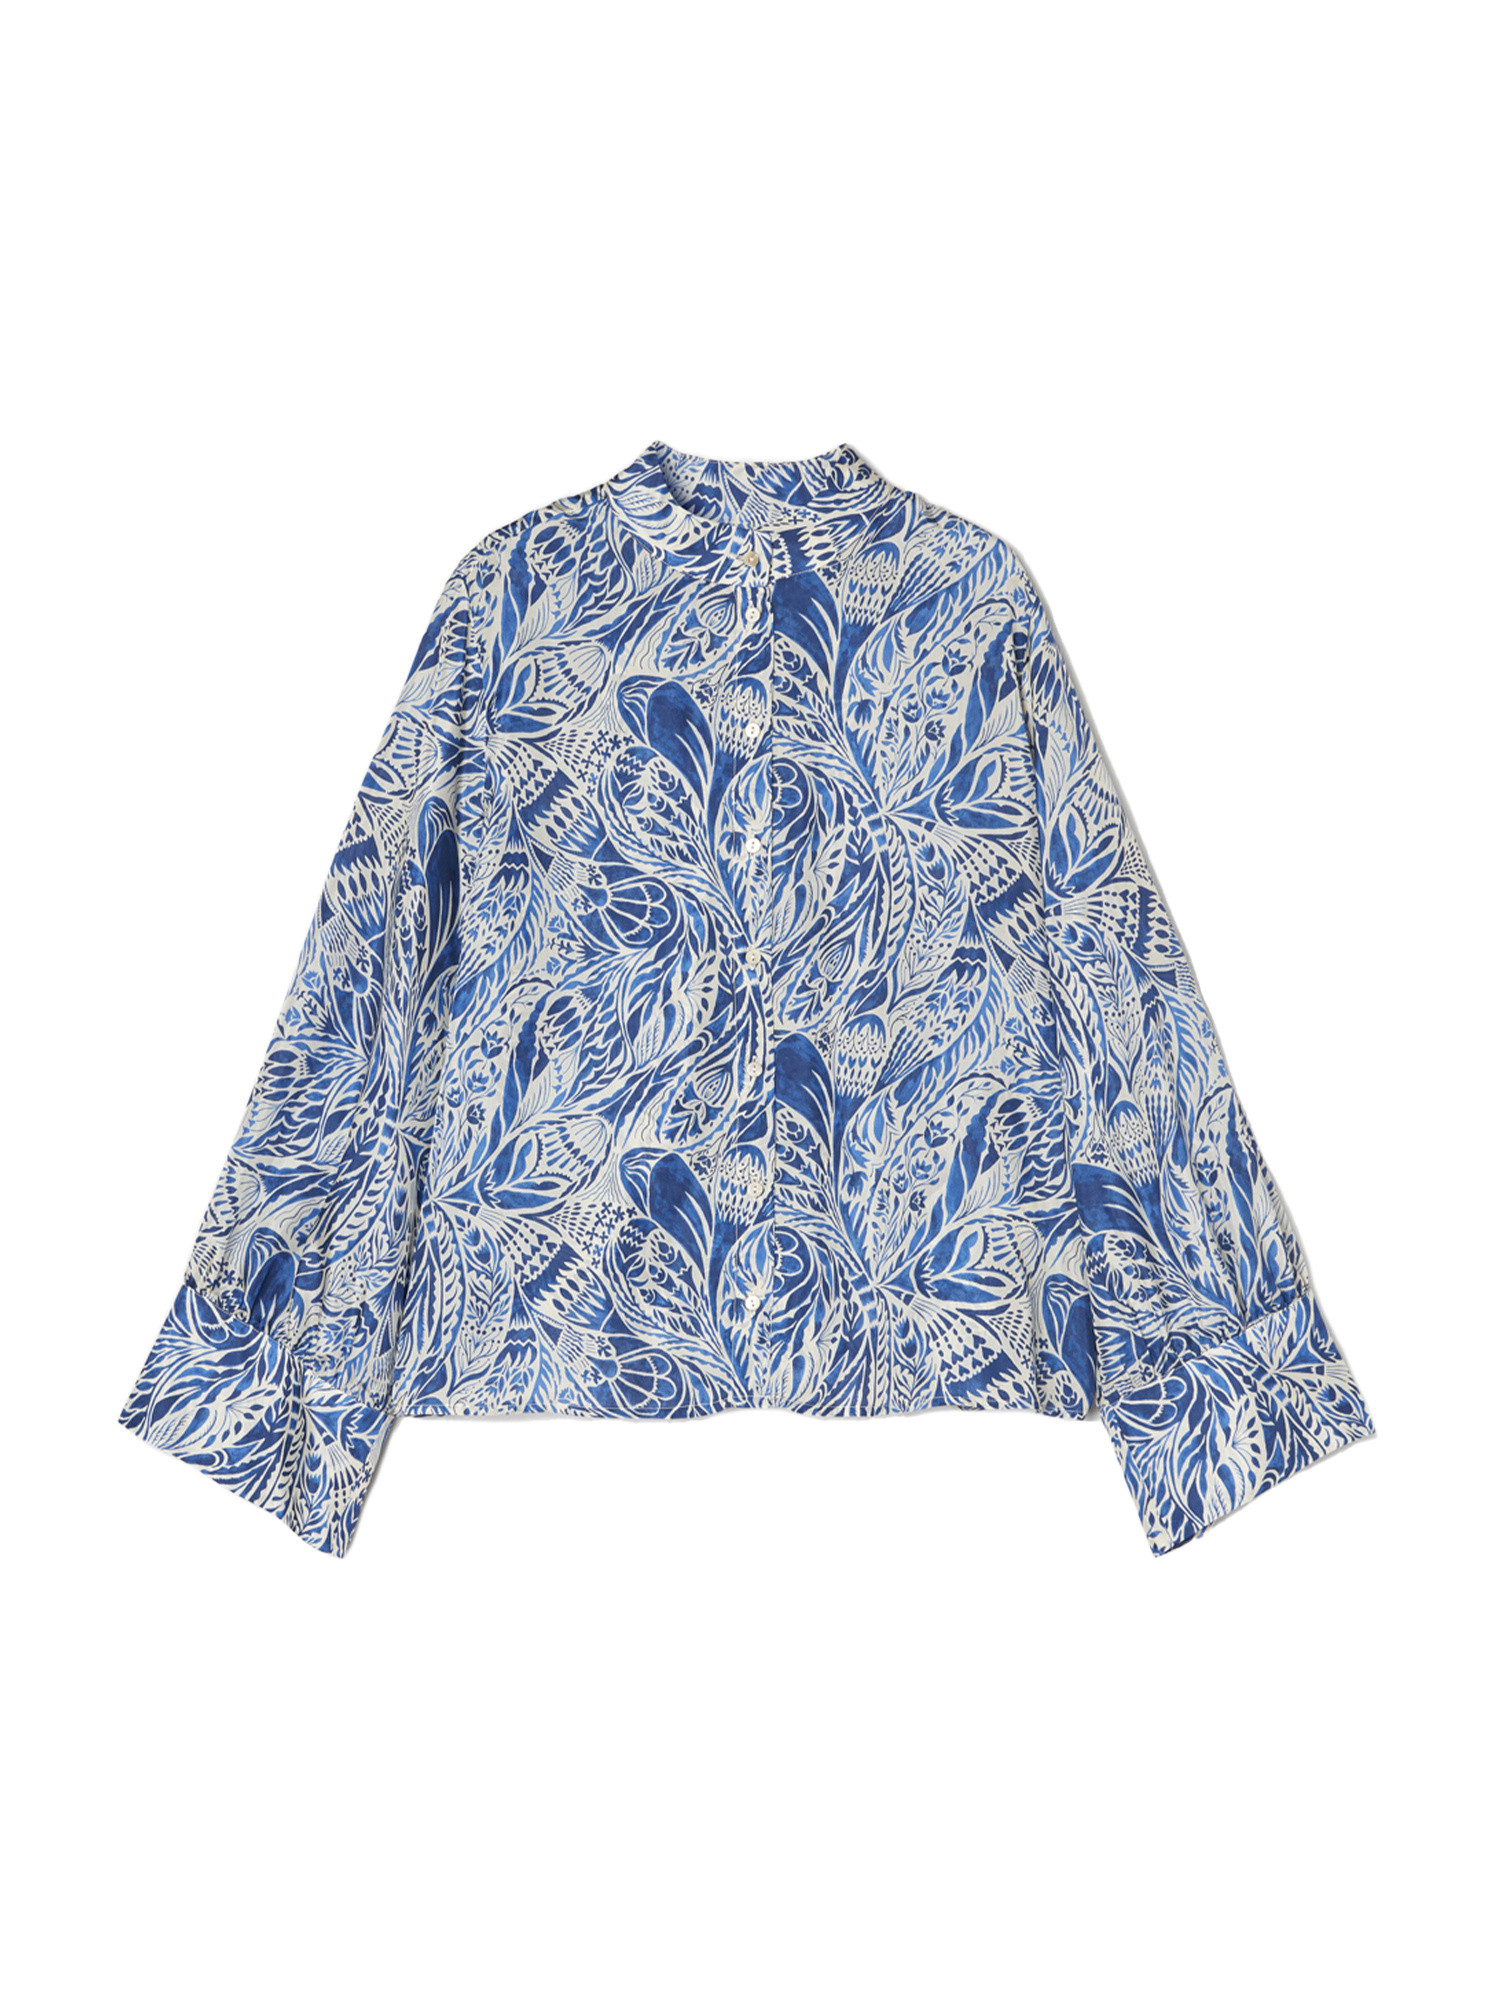 Momonì - Camicia Franklin in seta habotai stampata, Blu bluette, large image number 0